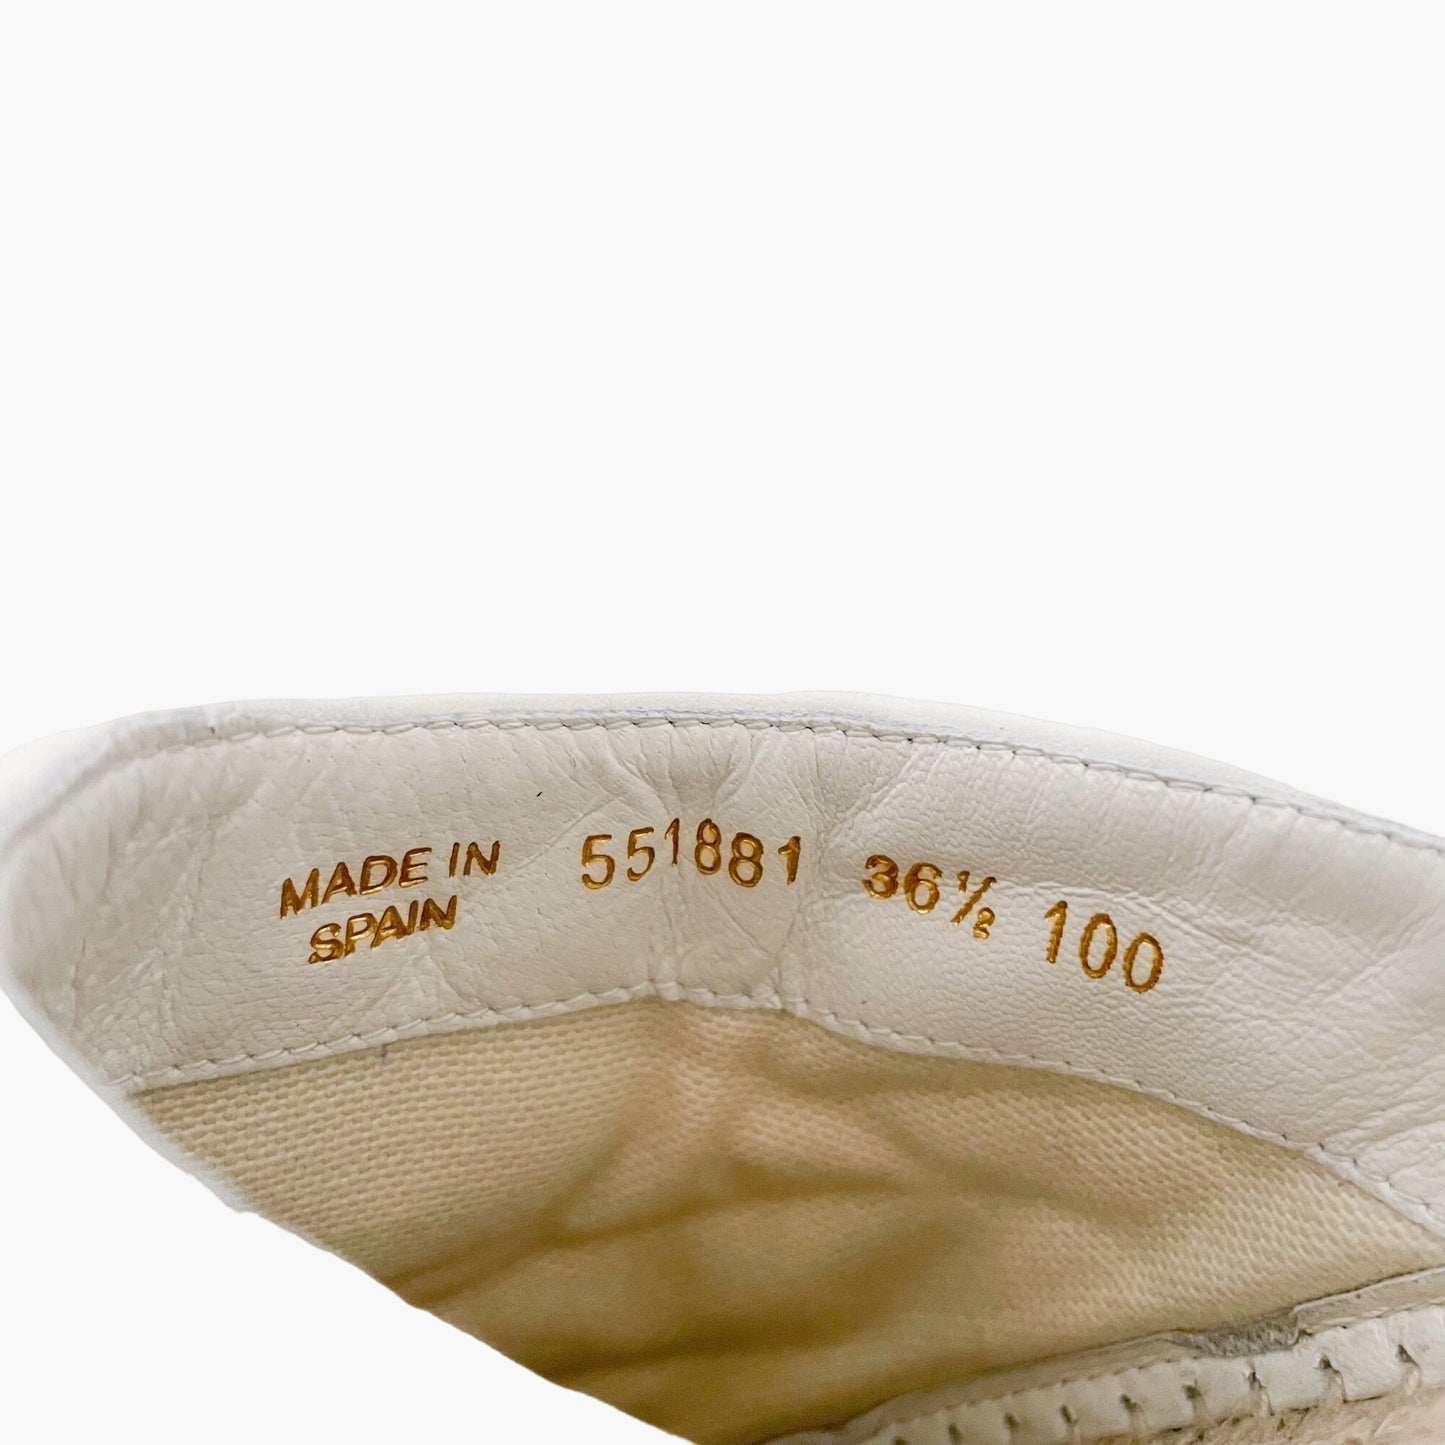 Gucci GG Marmont Espadrille Mules in White Matelassé Size 36.5